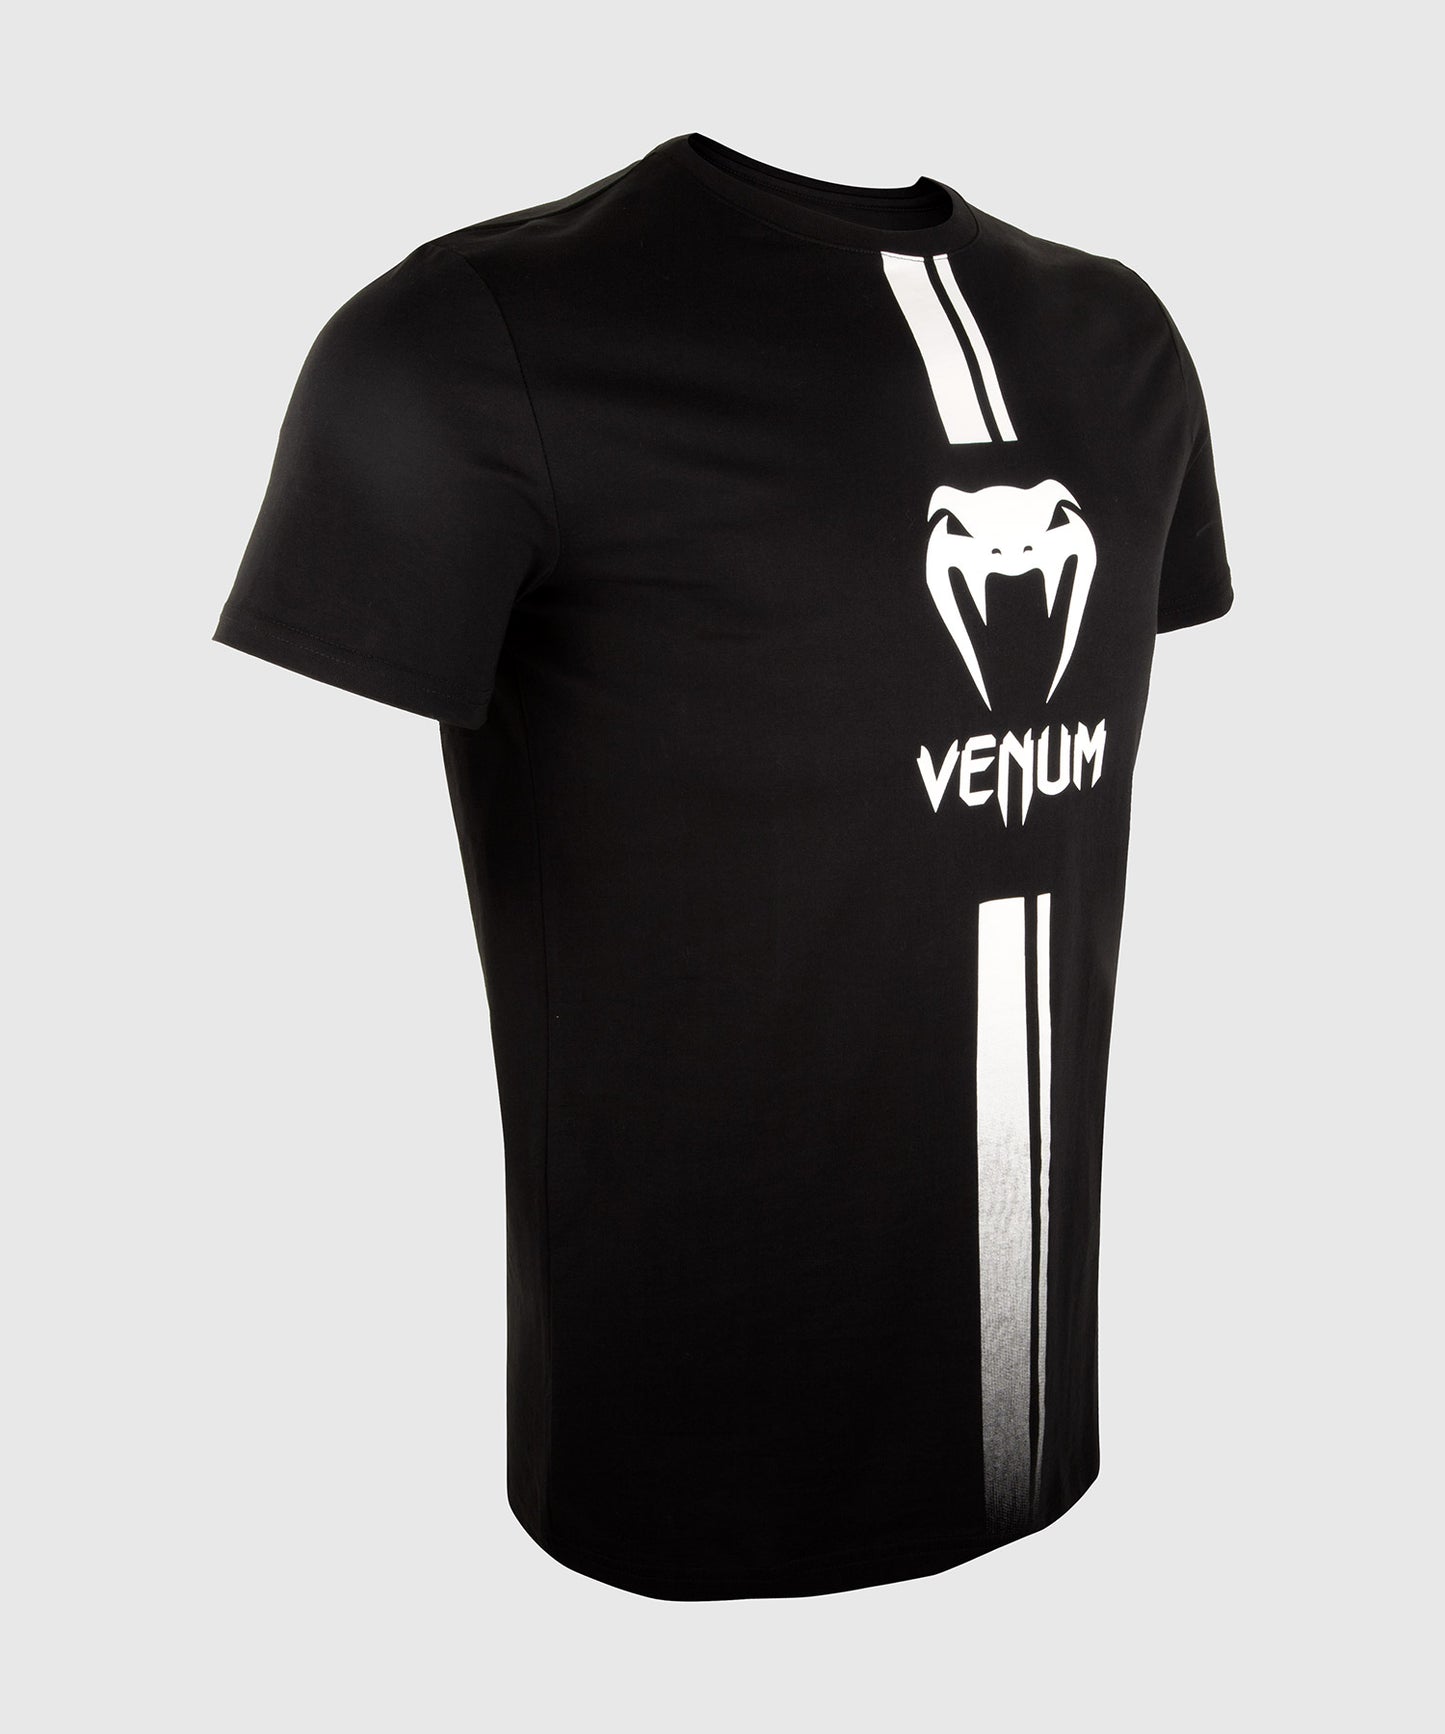 T-Shirt Venum Logos - Nera/Bianca